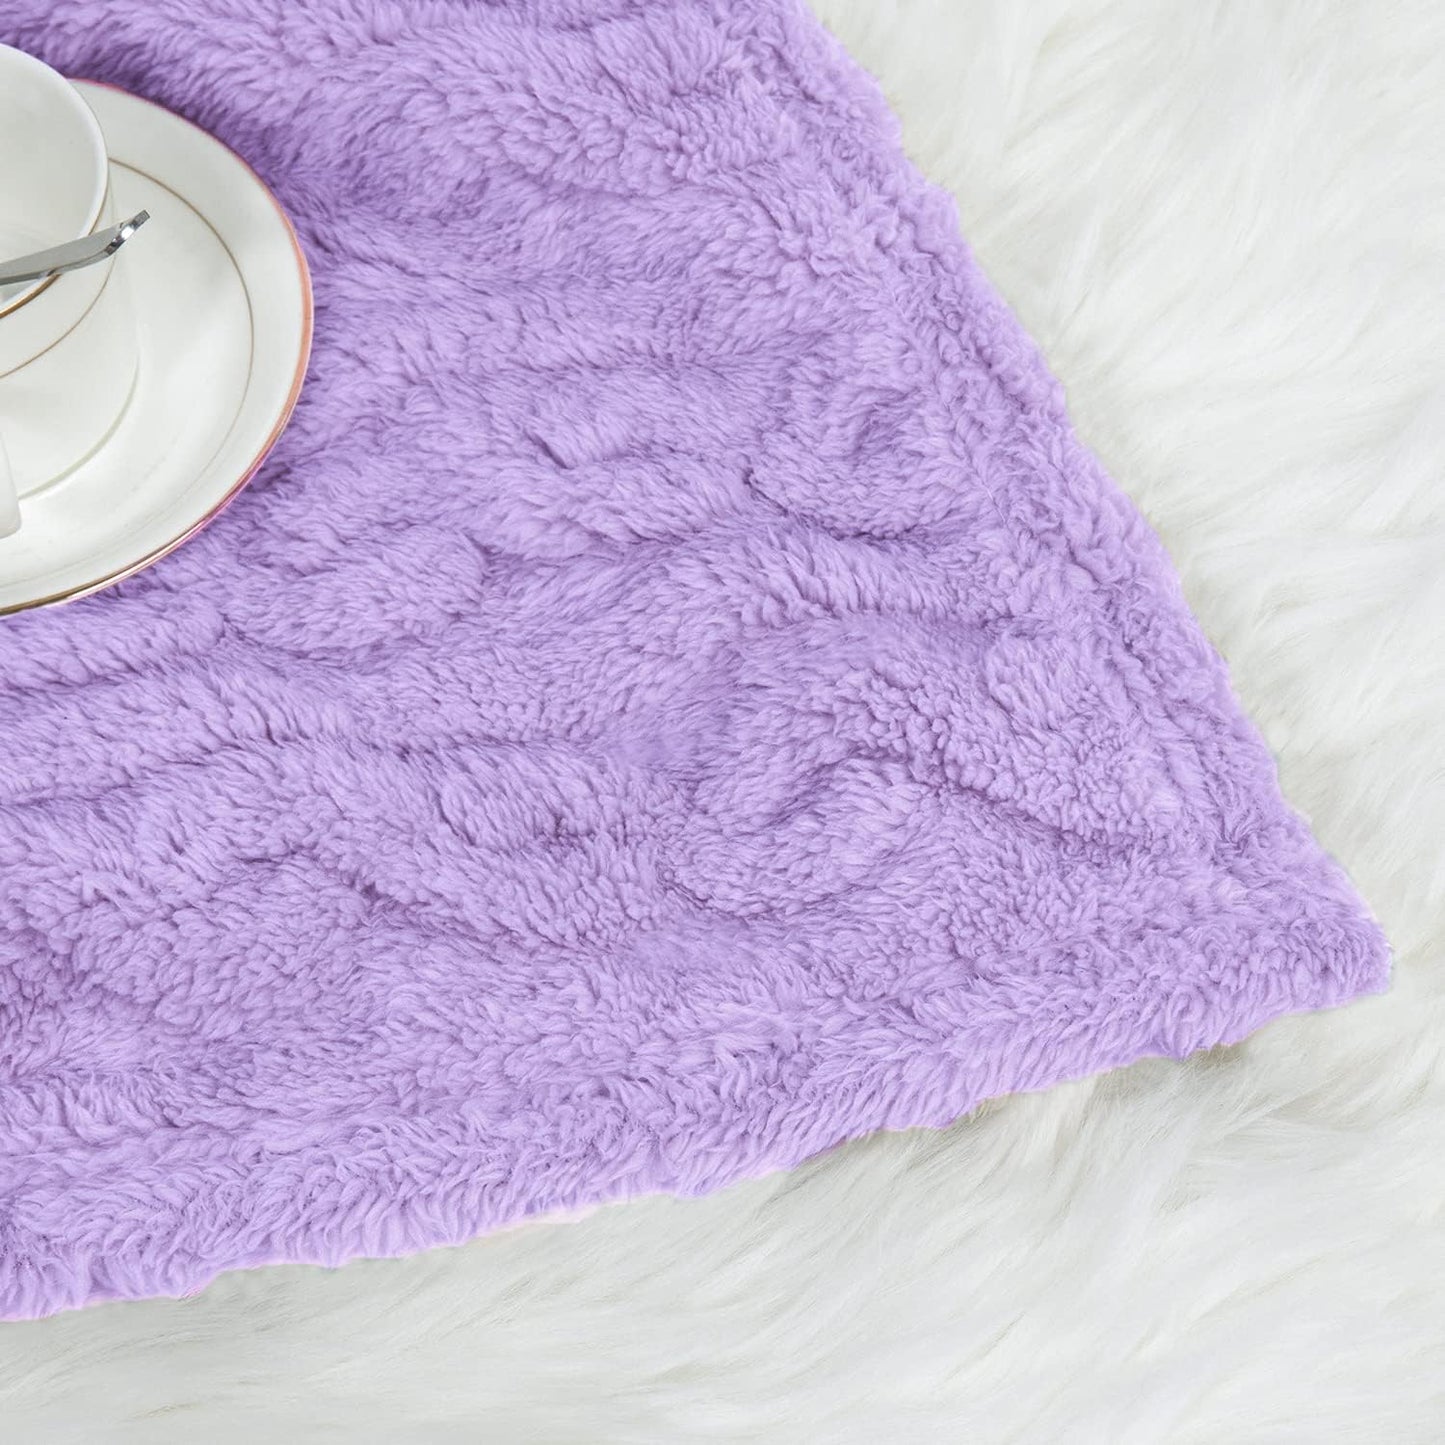 HOMRITAR Baby Blanket for Boys or Girls 3D Fluffy Fuzzy Blanket for Baby, Soft Warm Cozy Flannel Fleece Warm Blanket, Infant or Newborn Receiving Blanket (30x40inch, Cream)